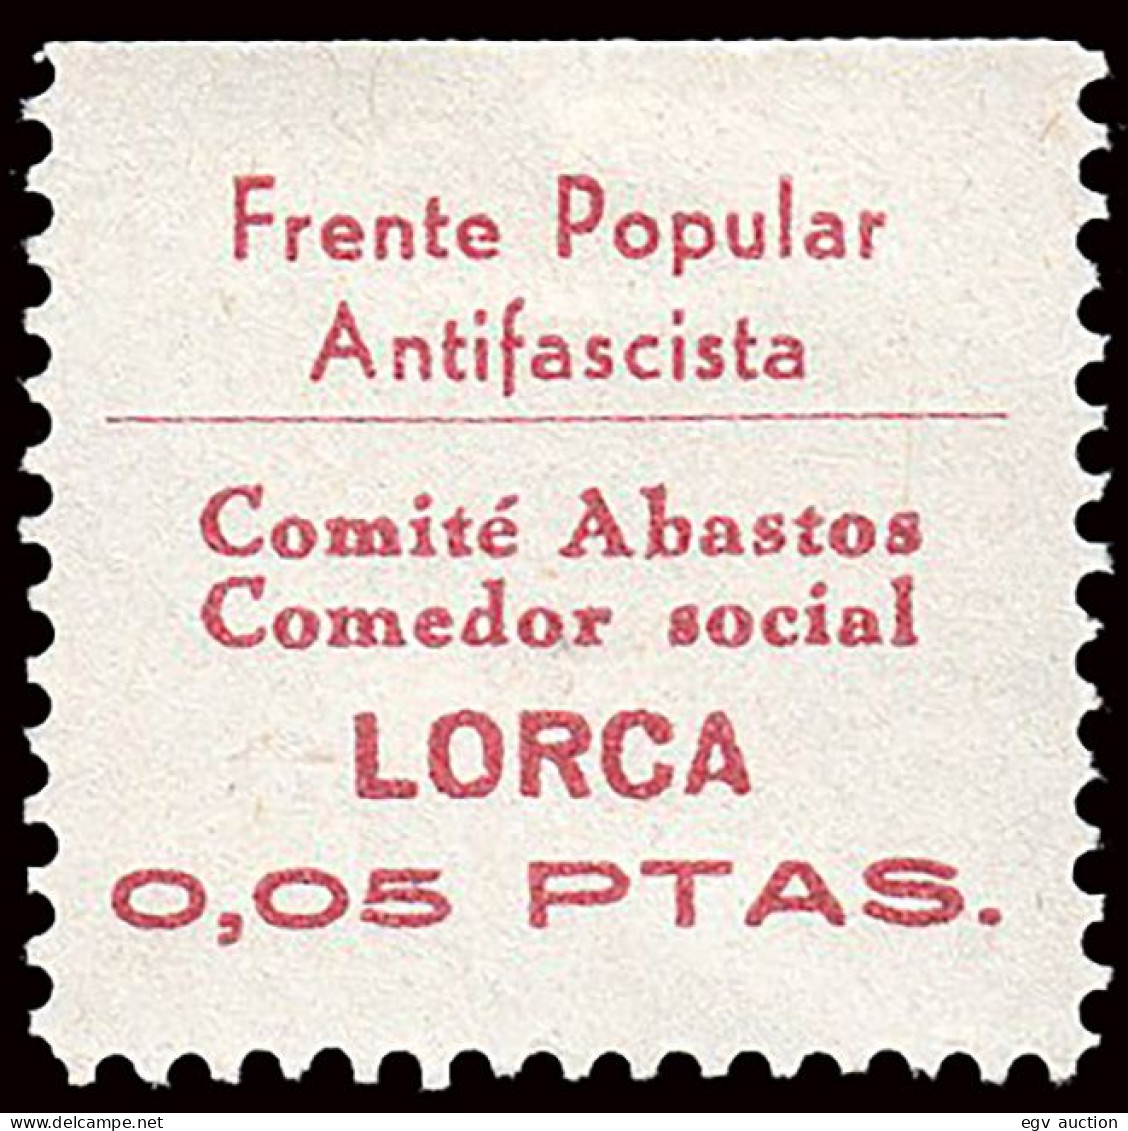 Murcia - Guerra Civil - Em. Local Republicano - Lorca - Allepuz ** 27 - "5cts. Frente Popular" - Spanish Civil War Labels